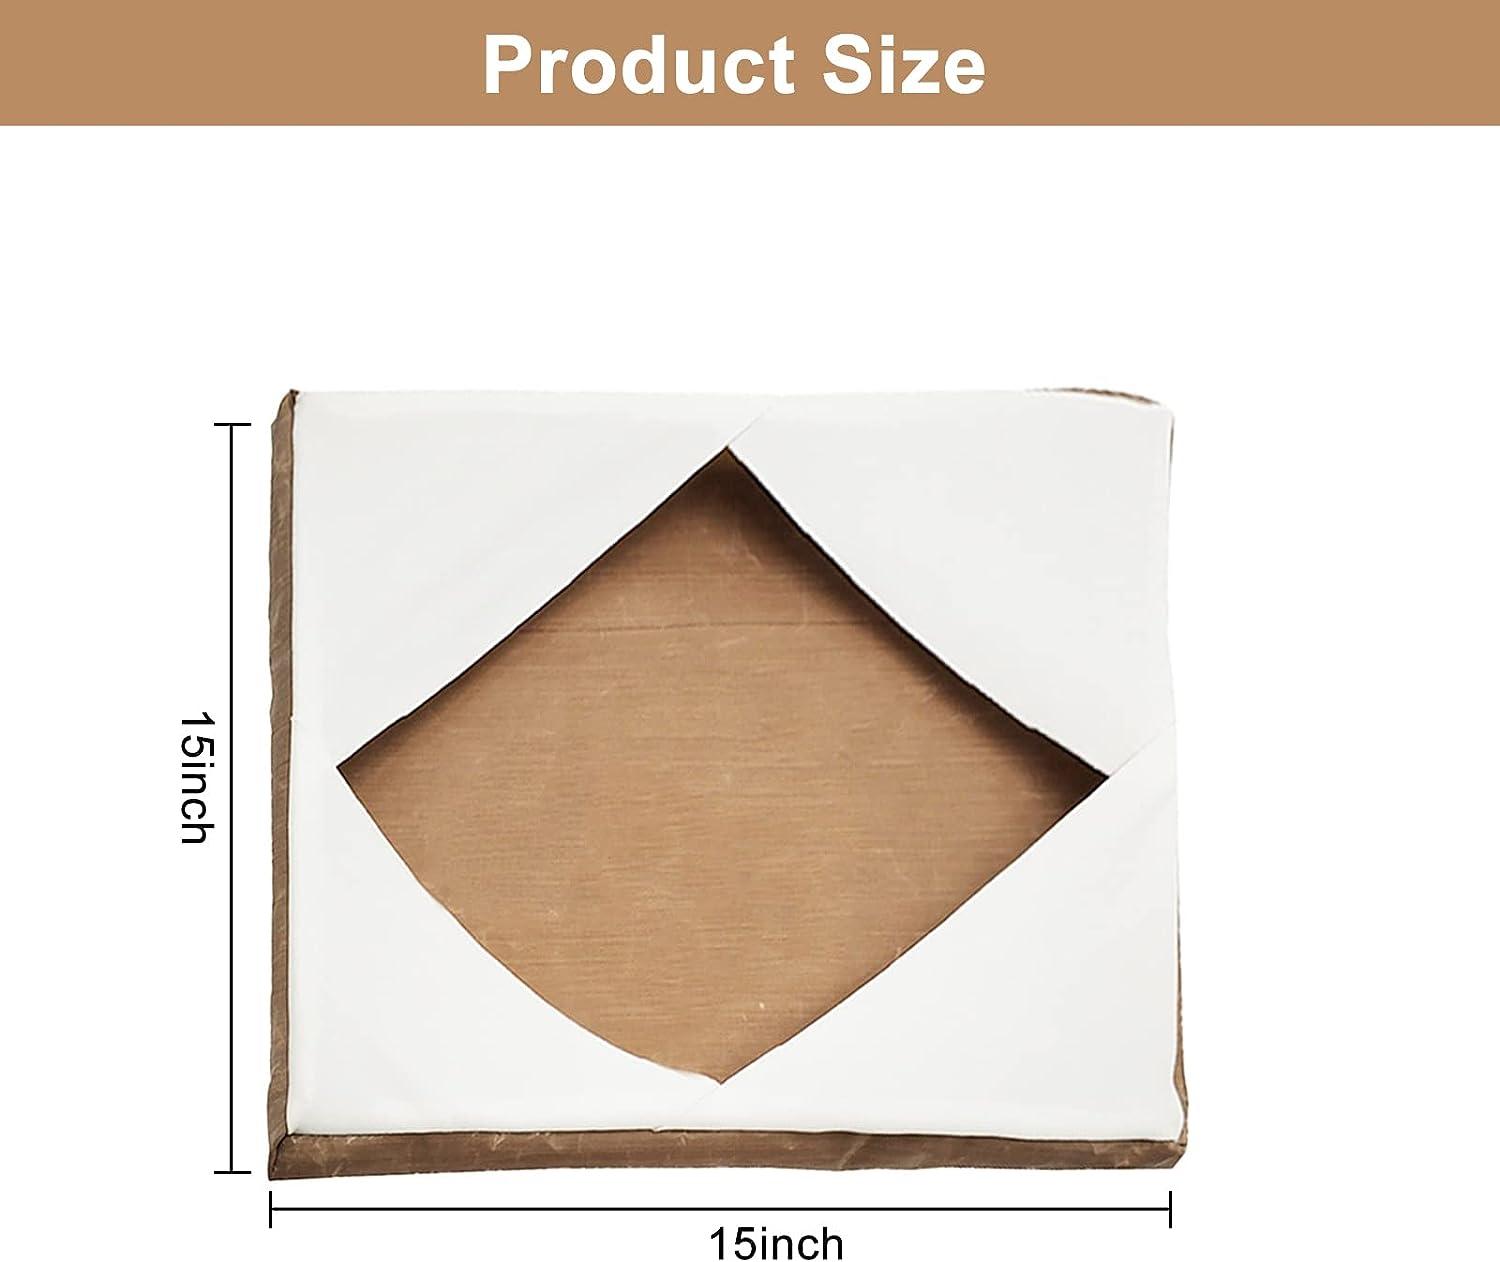 How to Make A Sublimated Heat Press Teflon Sheet Cover 